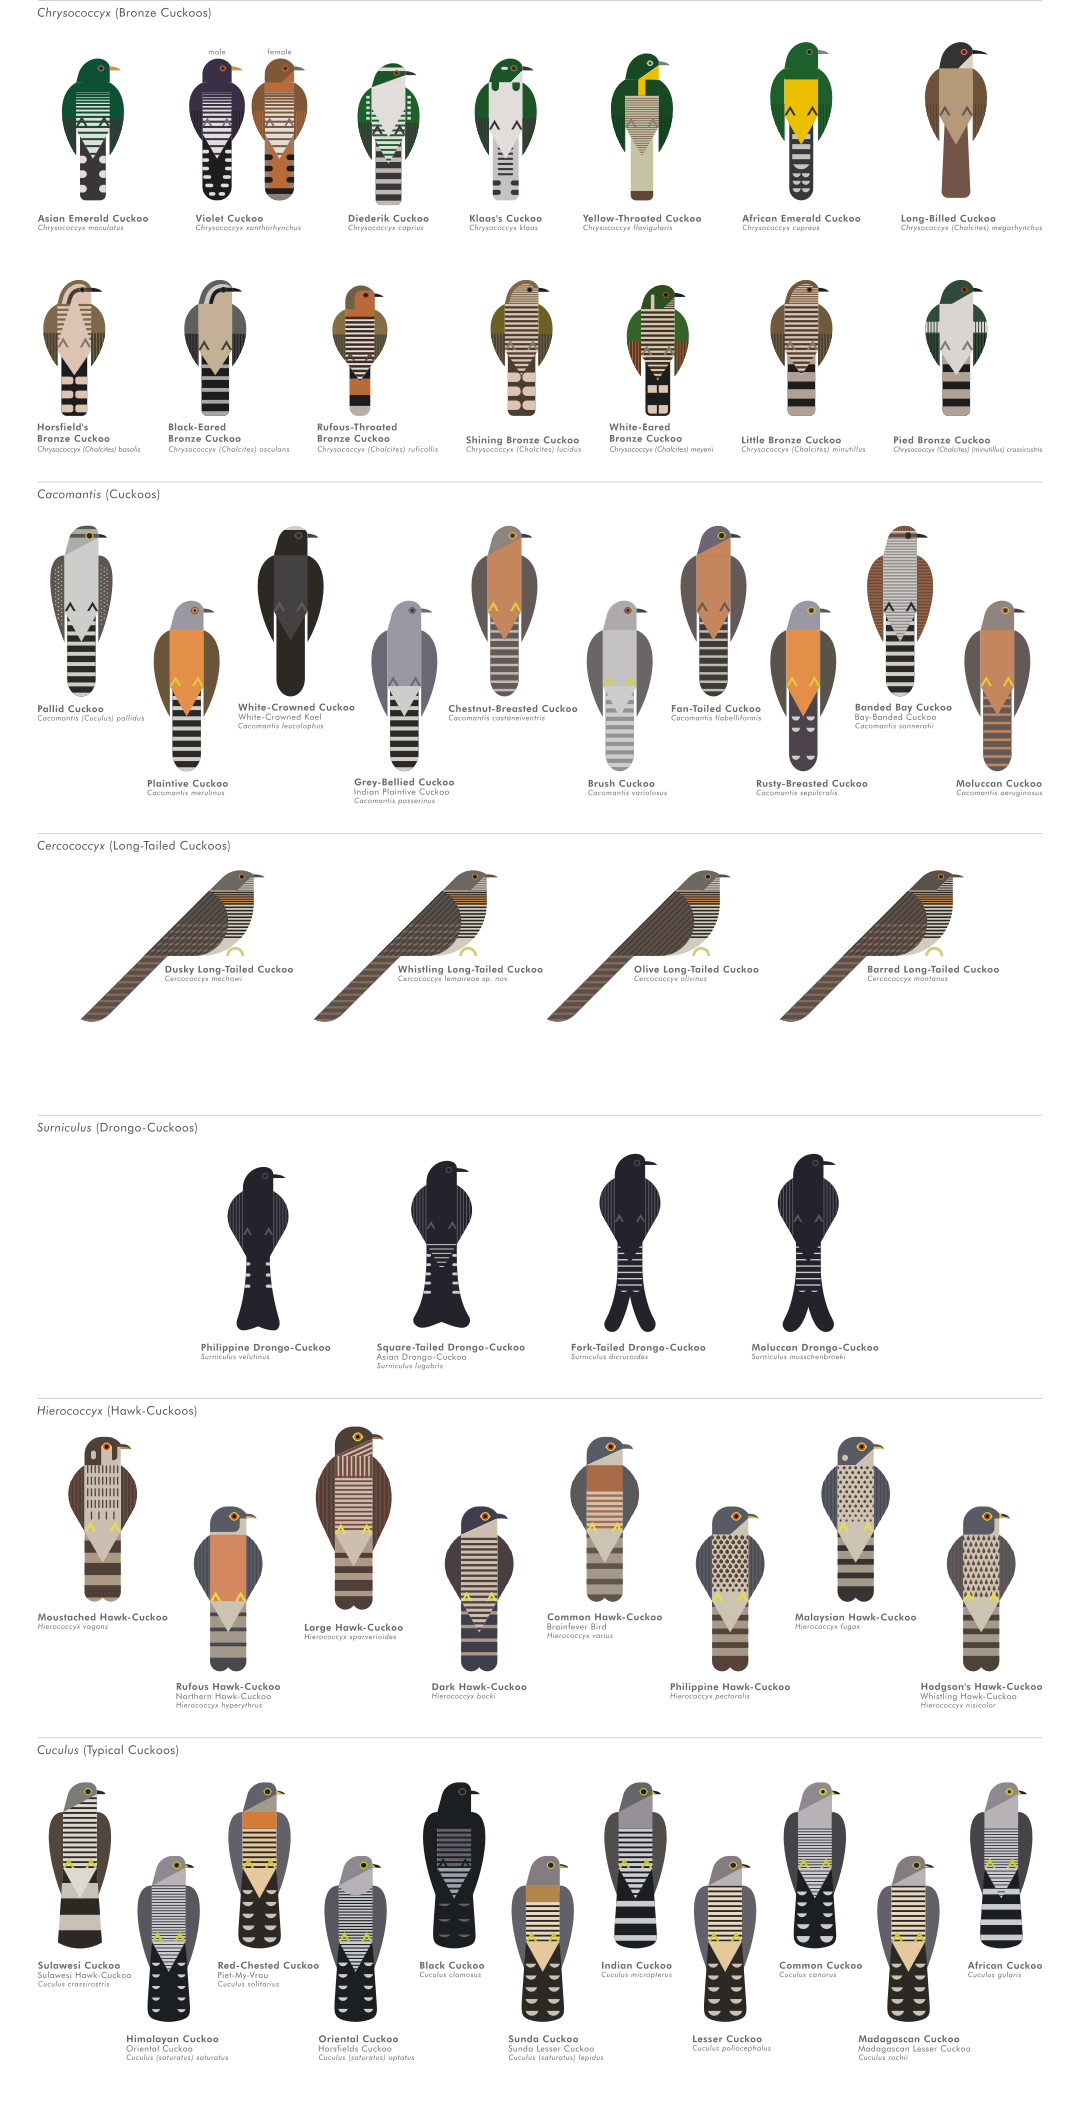 scott partridge - ave - avian vector encyclopedia - cuckoos Cuculidae Cuculiformes - vector bird art